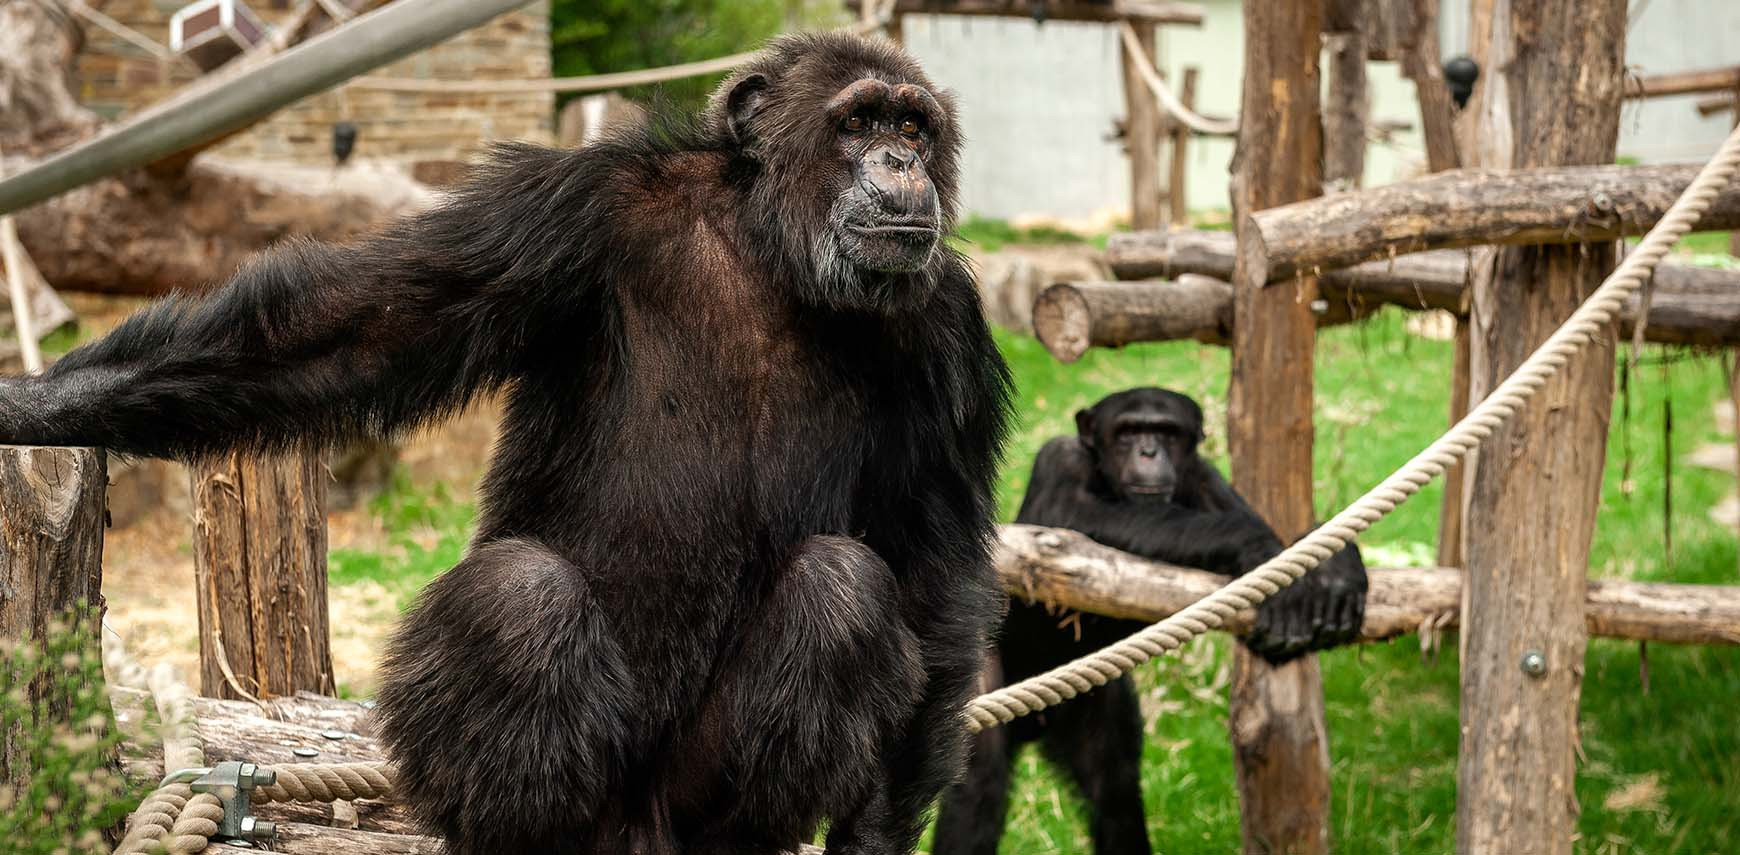 Chimpanseepolitiek met cruciale coalities